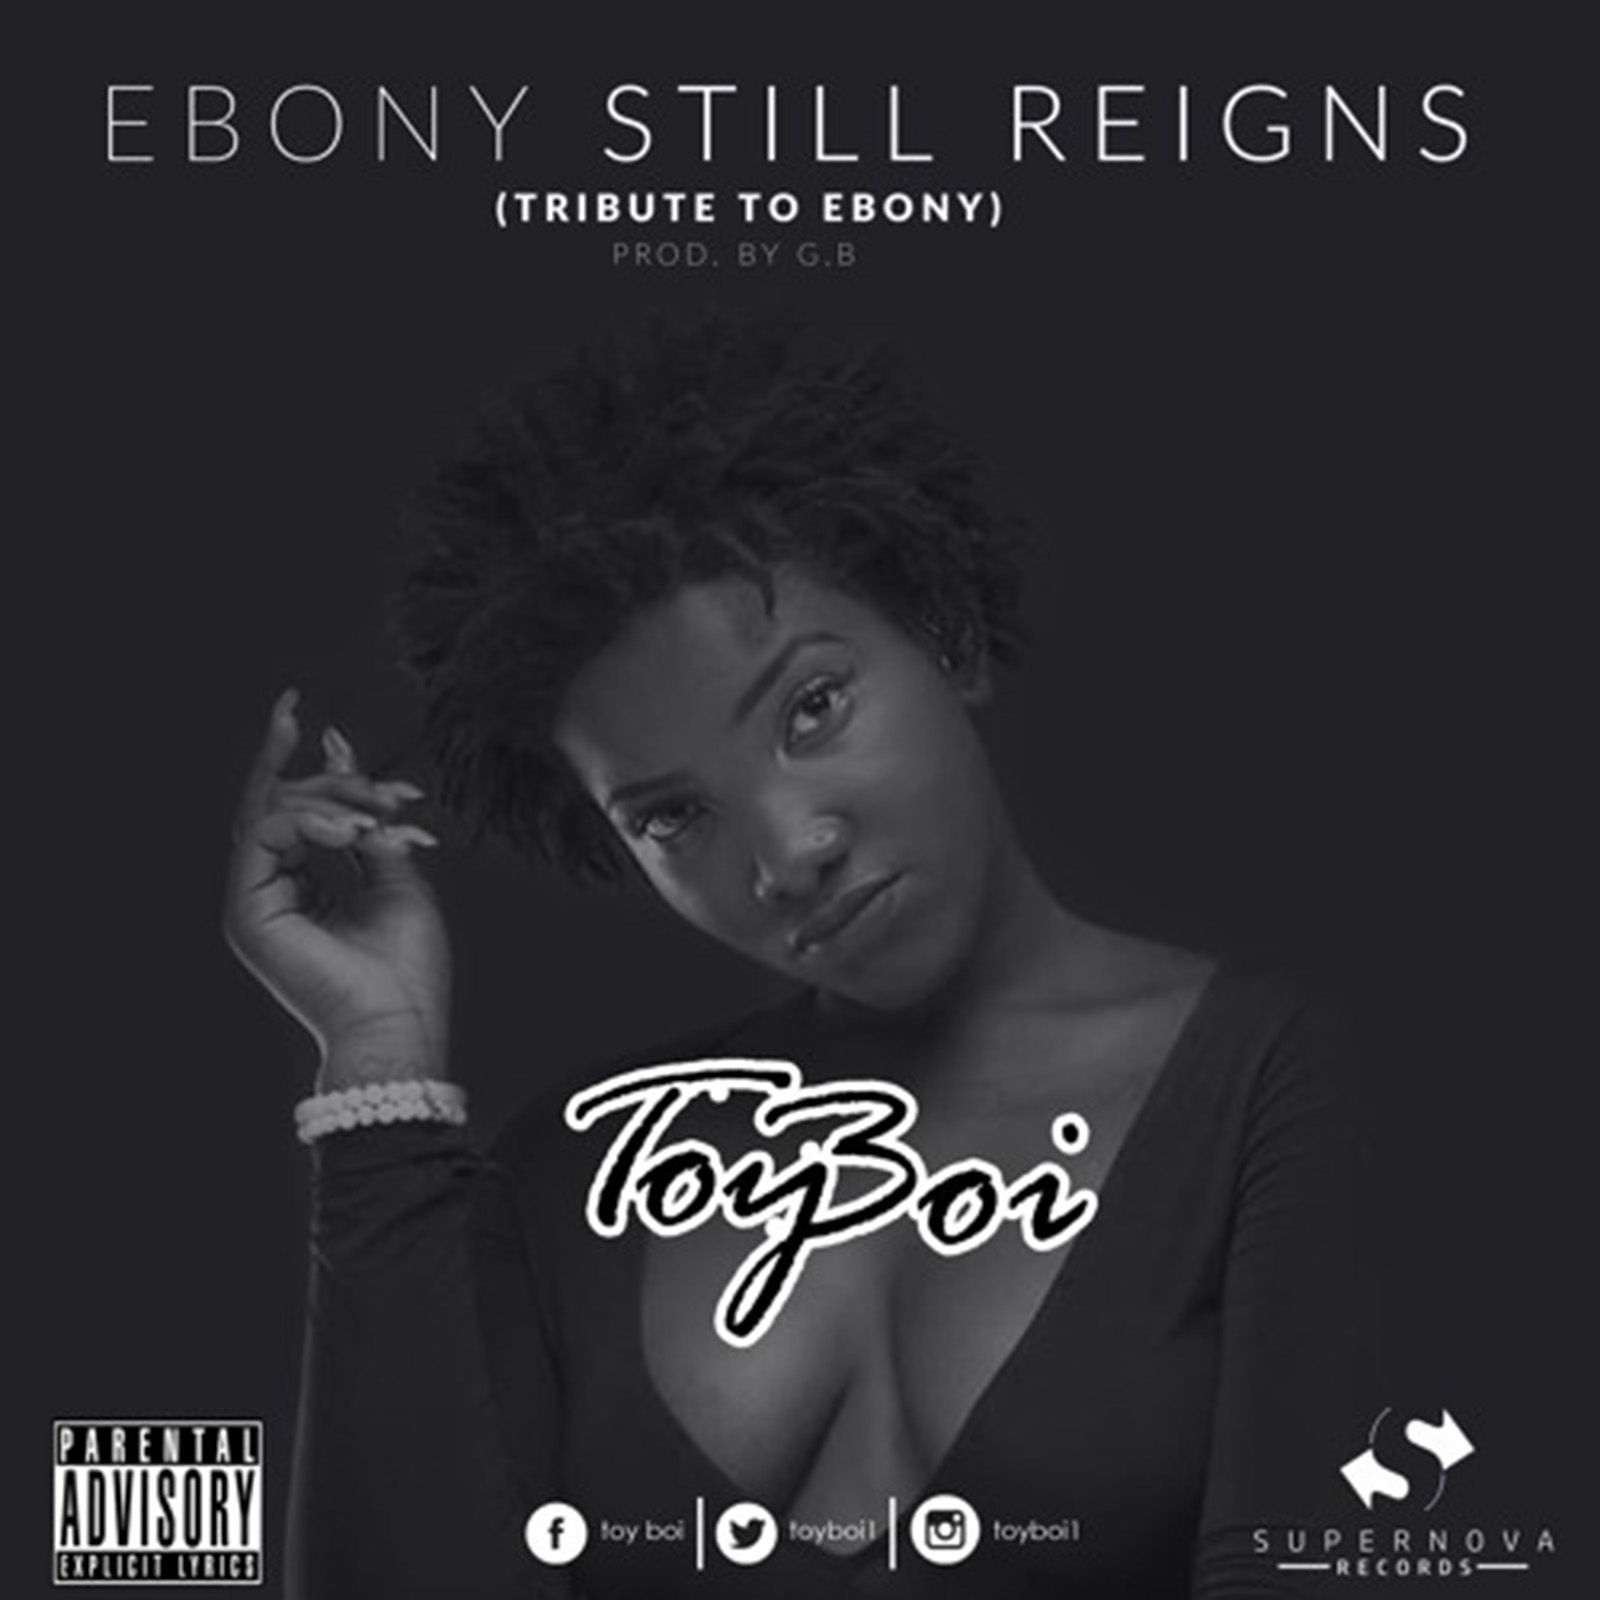 Ebony Still Reigns (Tribute To Ebony) by Toy Boi